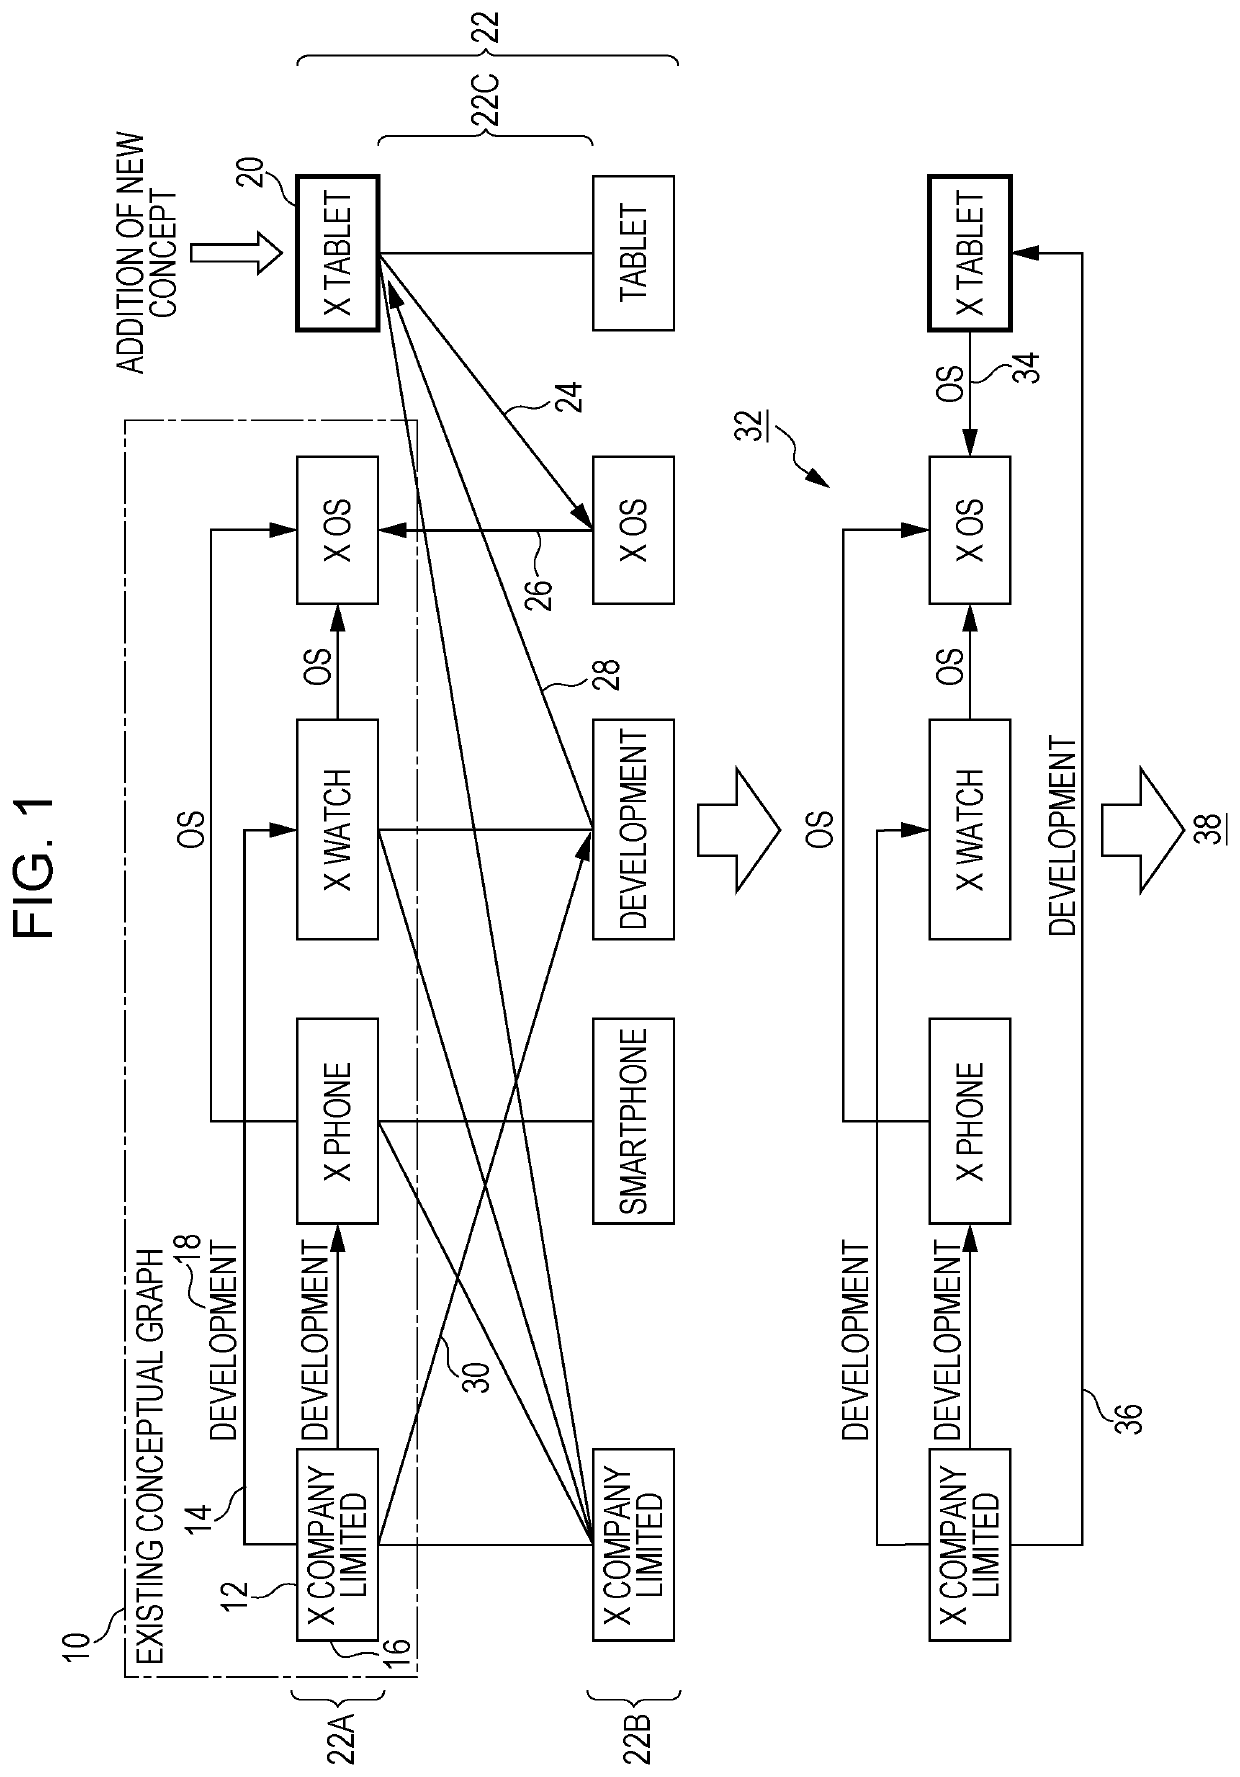 Conceptual graph processing apparatus and non-transitory computer readable medium